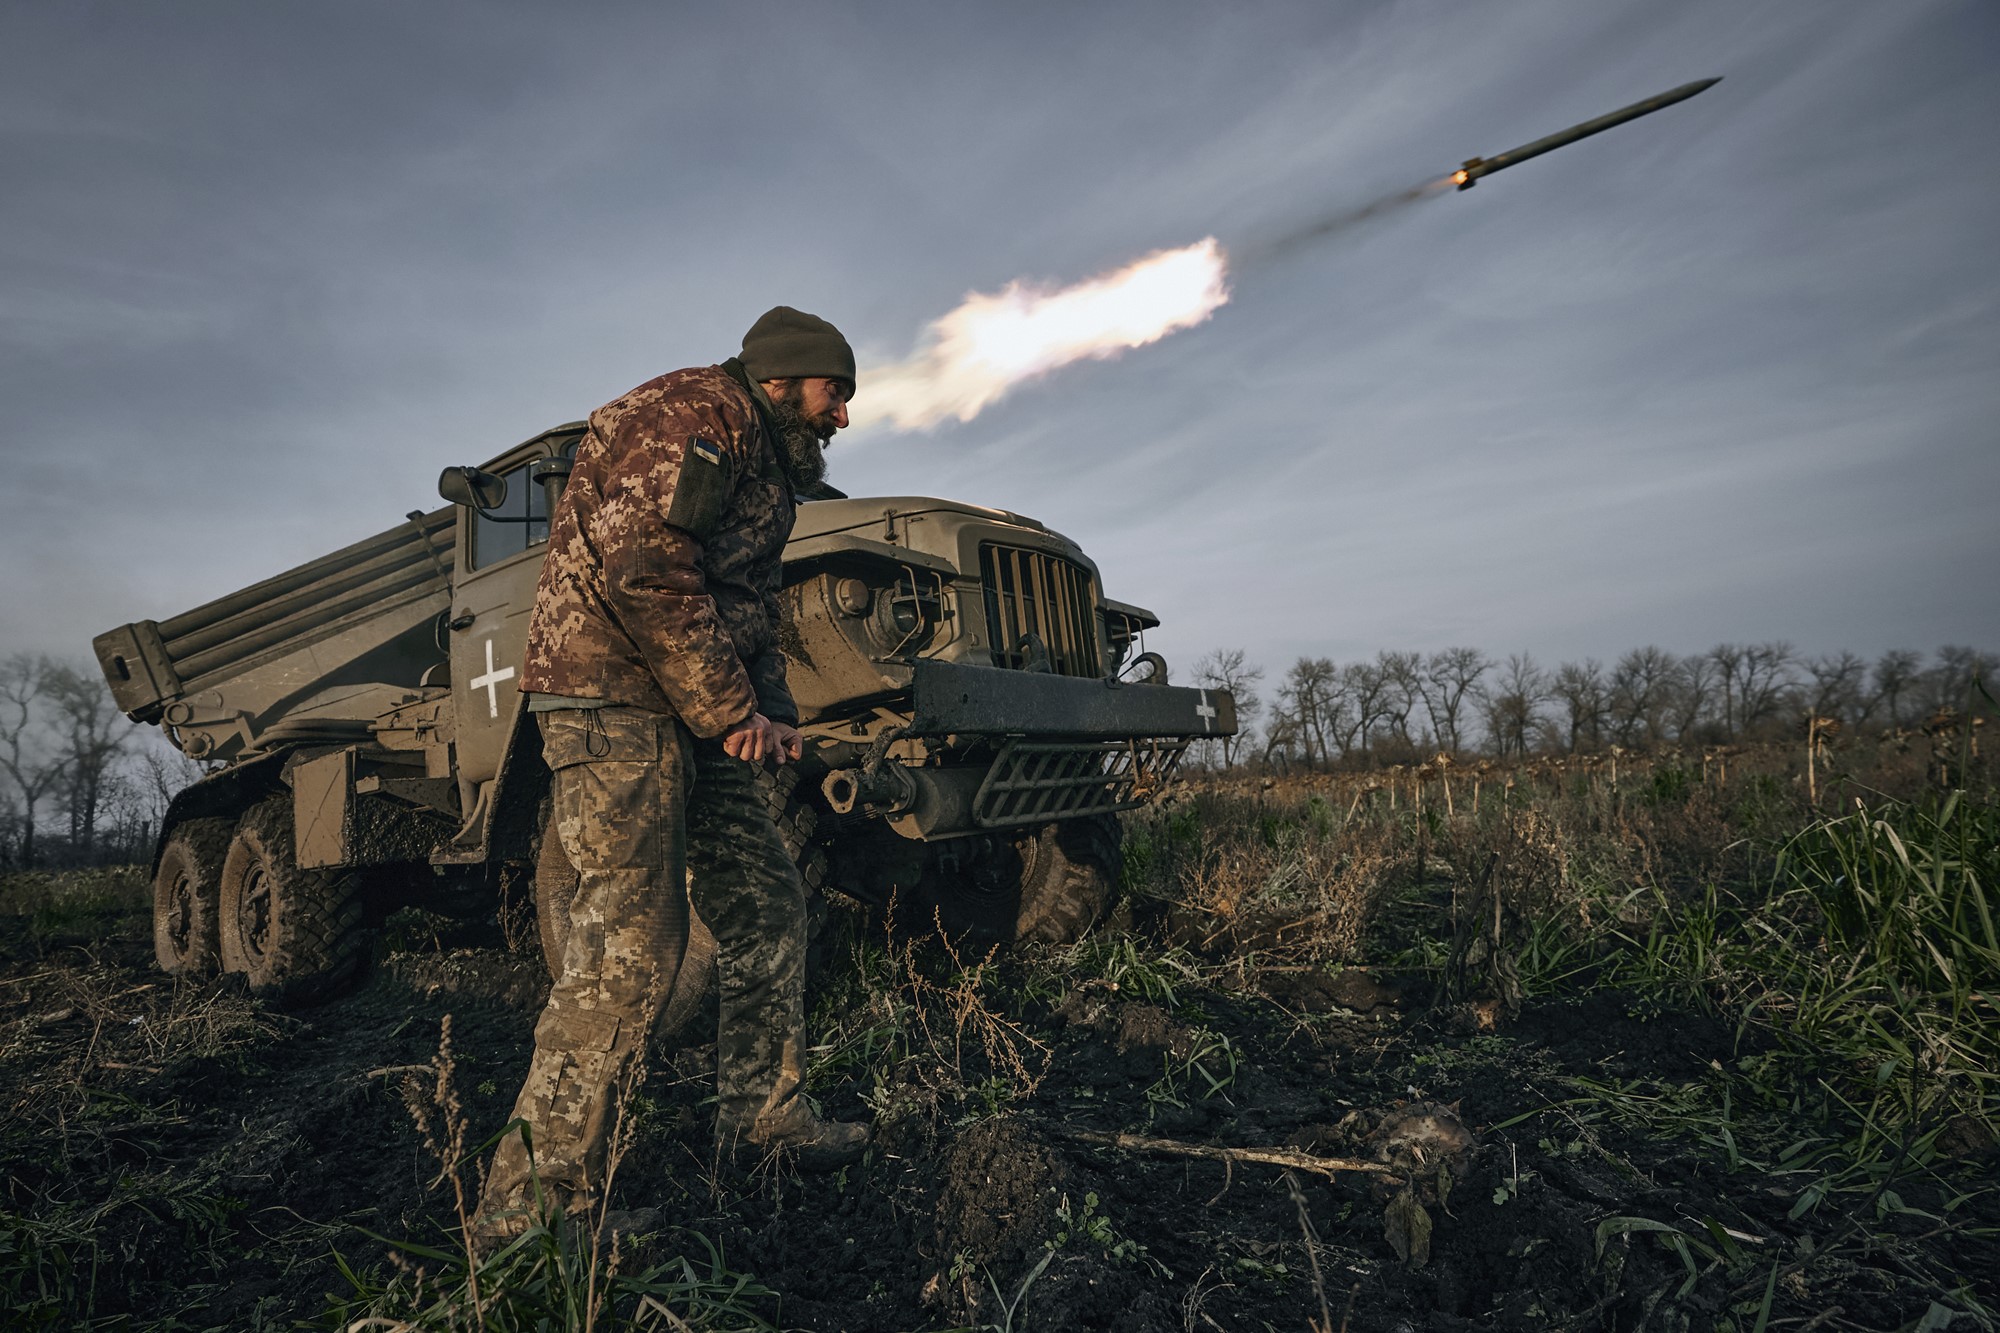 A rocket launches near a Ukrainian soldier.